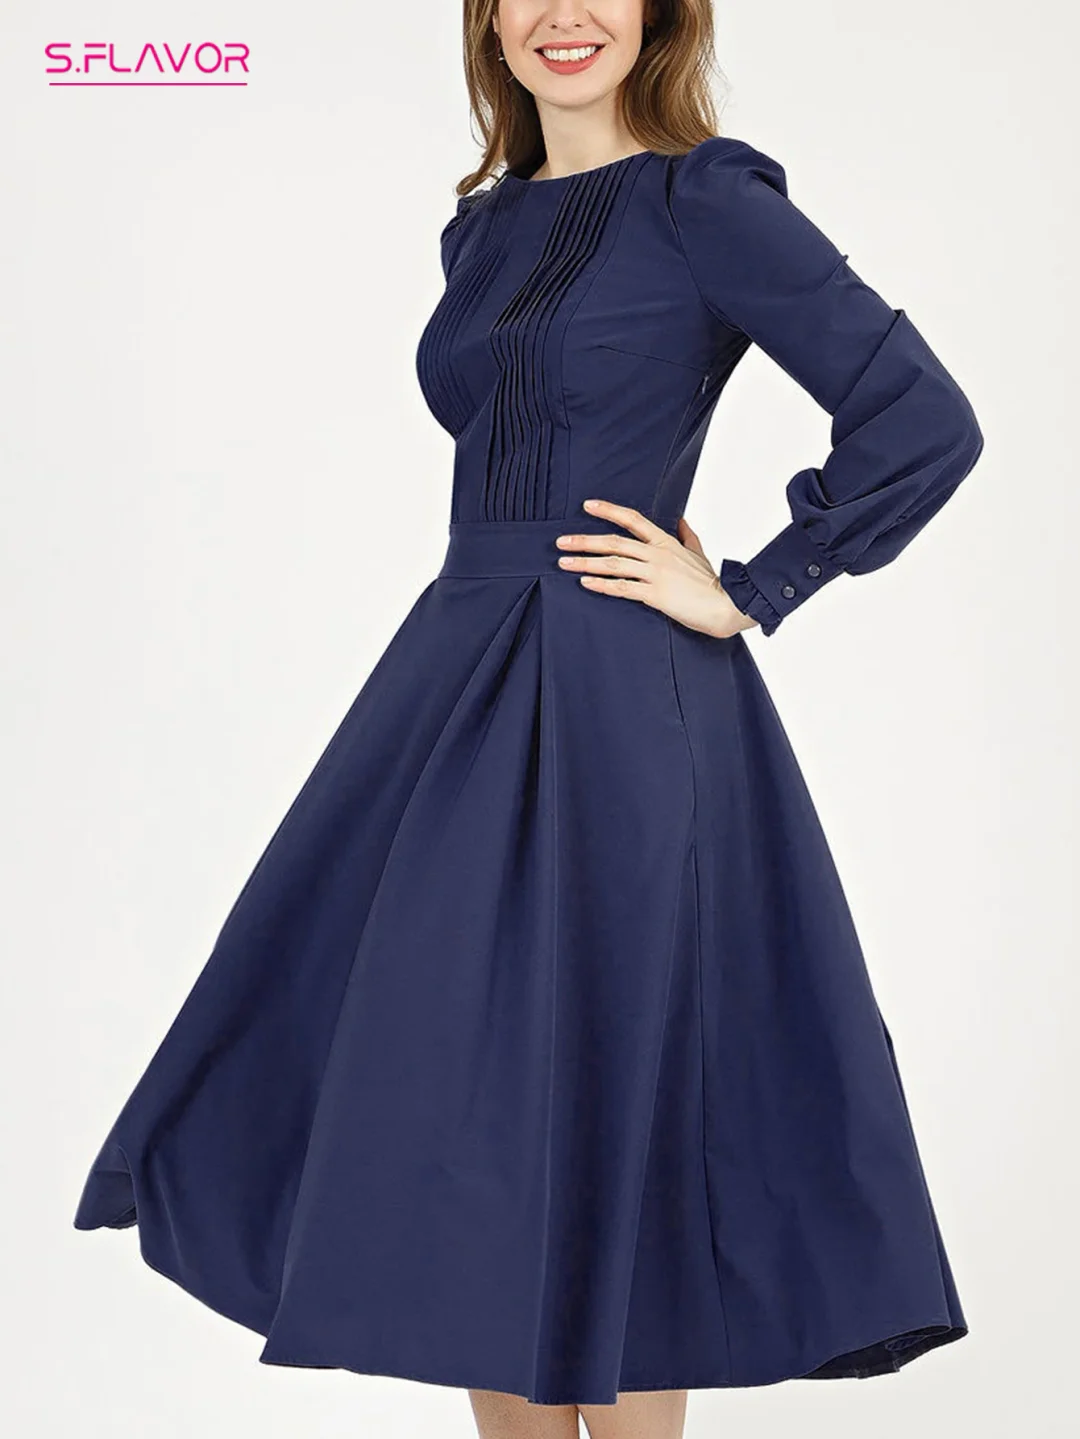 Jangj S.FLAVOR Women Long Sleeve Classic Midi Dress Elegant O-neck Navy Color Working Dresses 2022 Autumn Winter